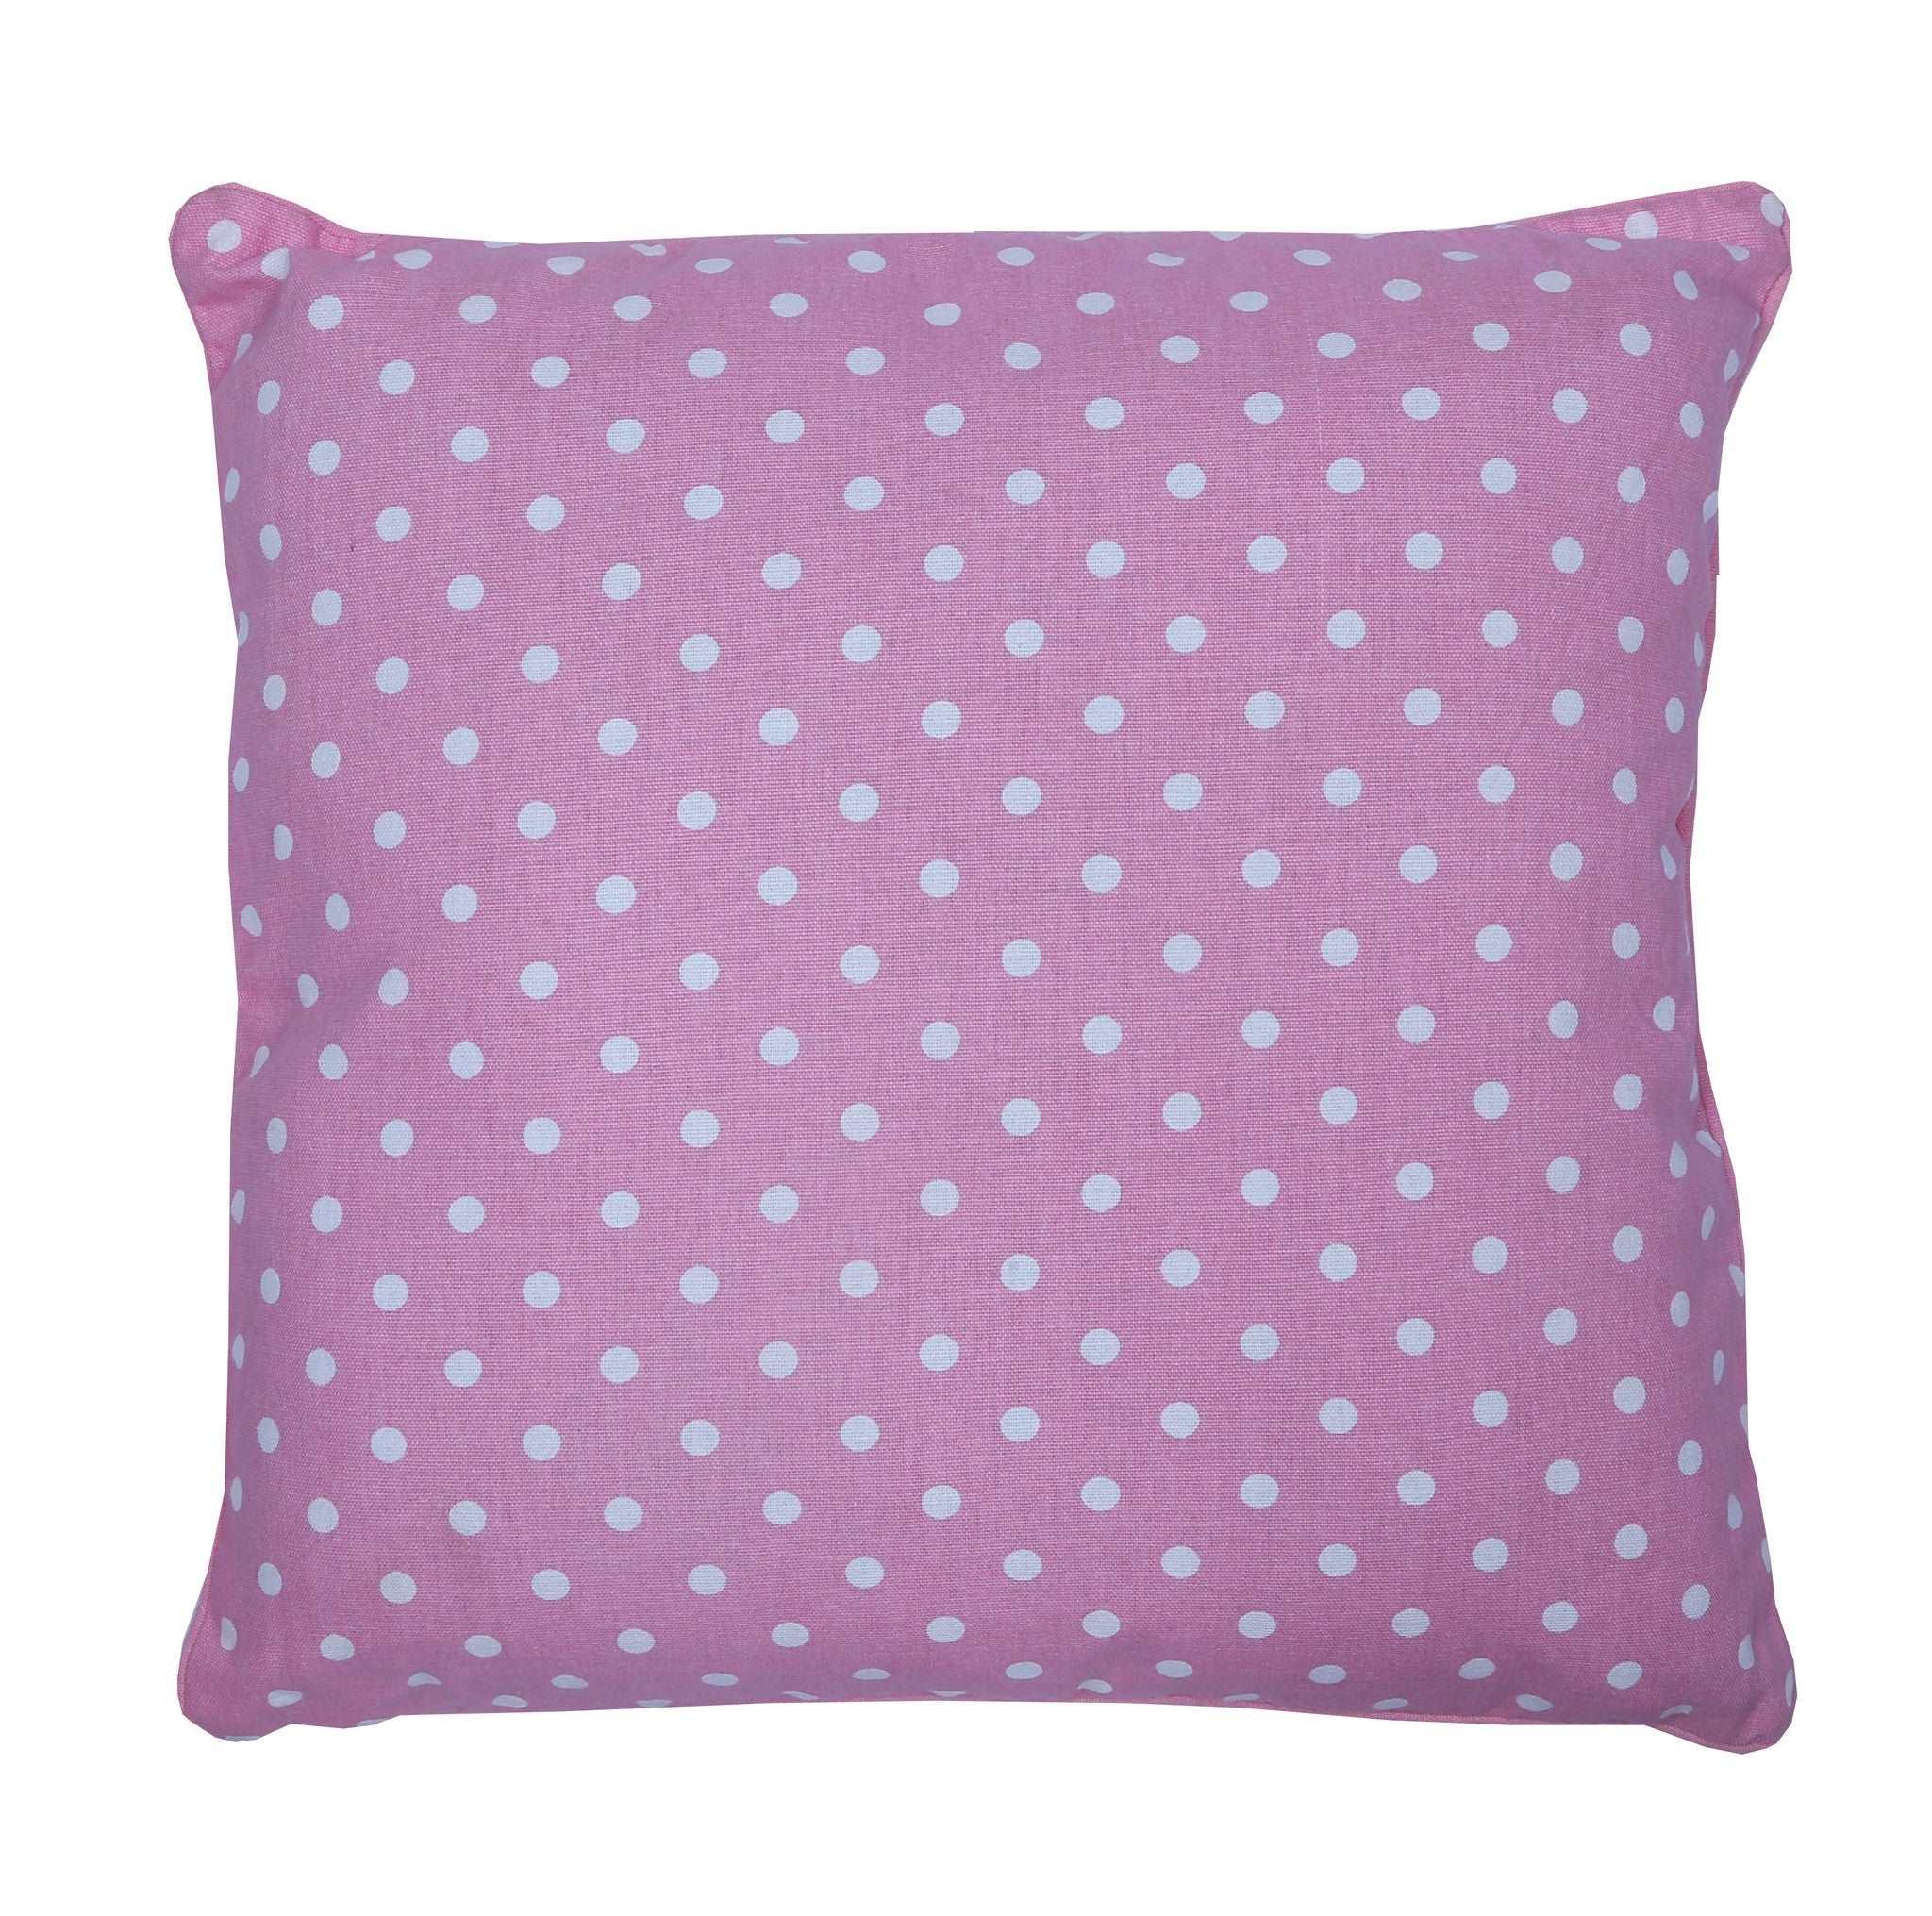 Cushion Cover - Polka Dot Pink